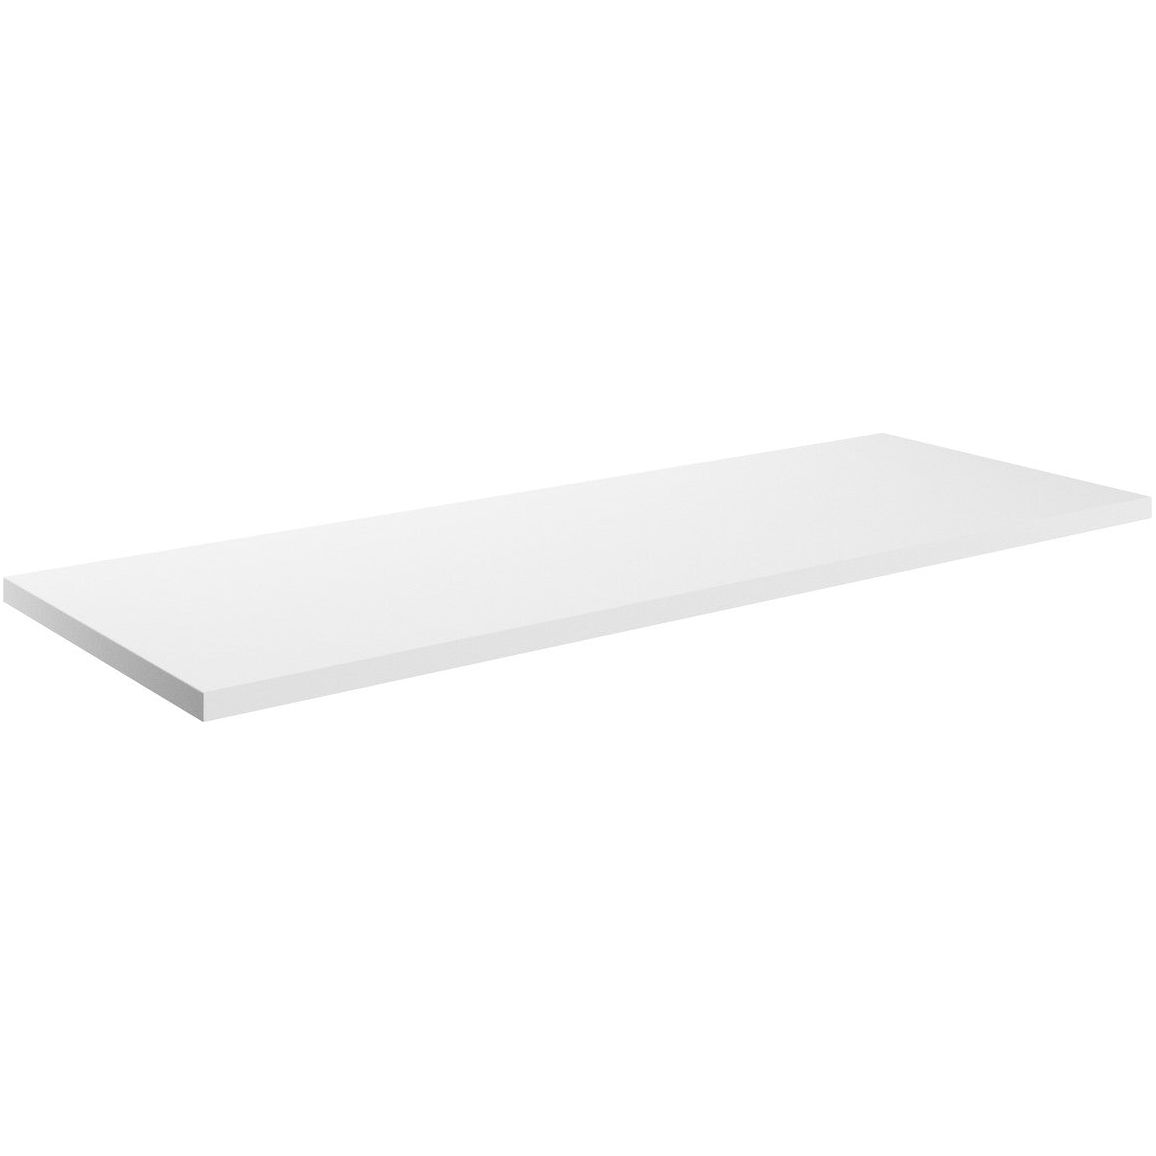 Bateba Laminate Worktop (1200x460x18mm) - White Gloss